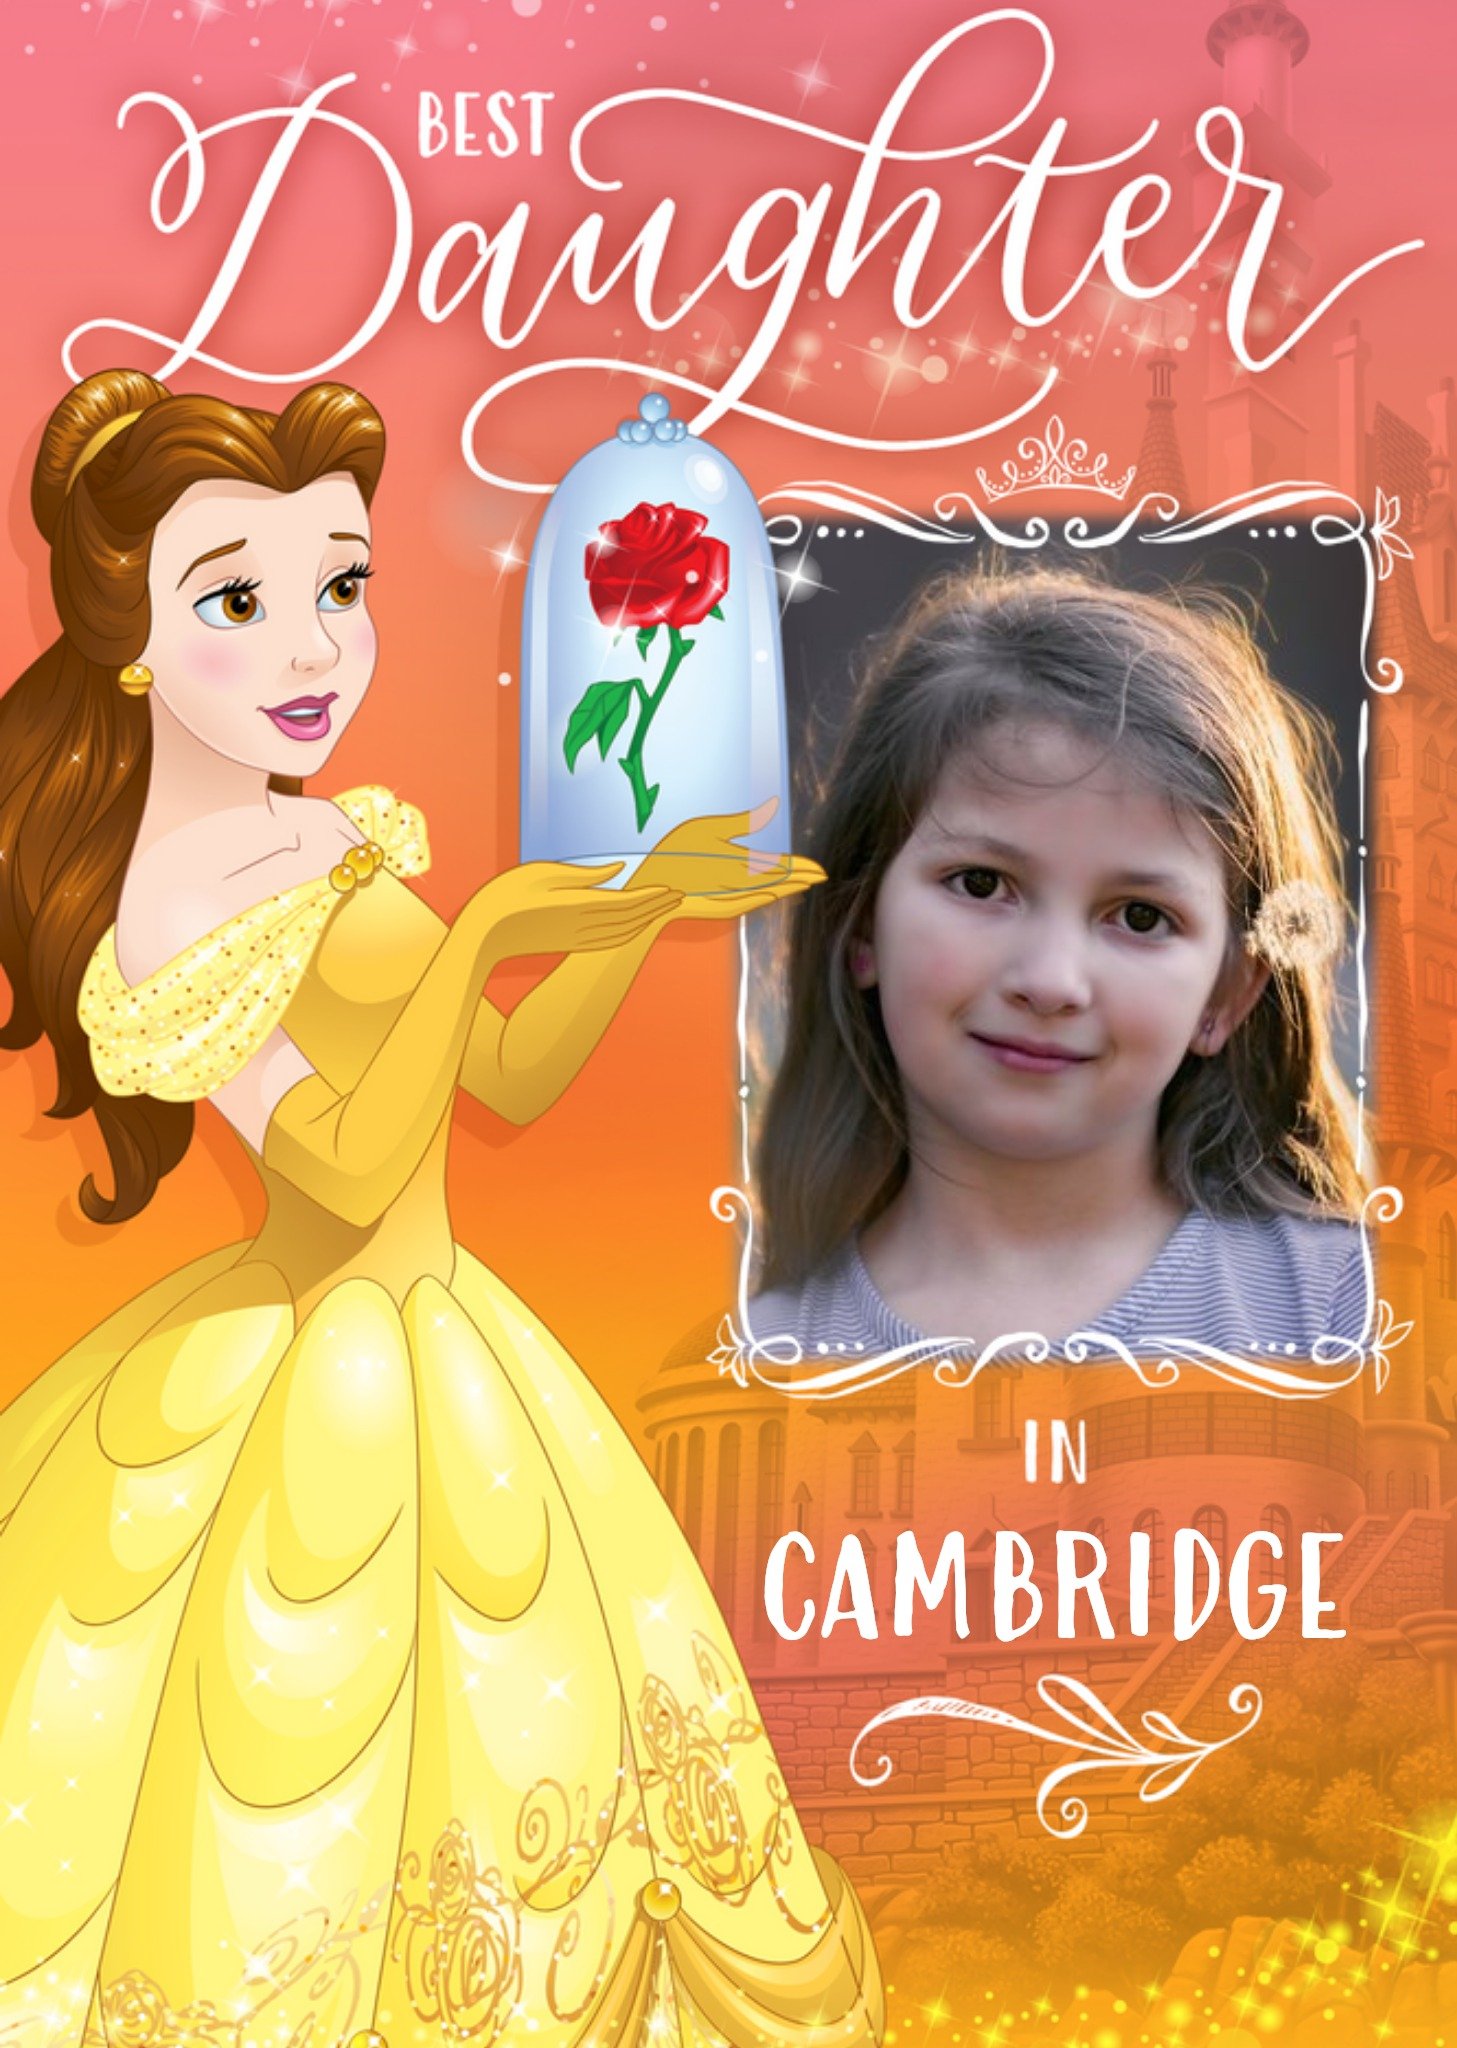 Disney Princesses Disney Beauty And The Beast Belle Best Daughter Birthday Card Ecard